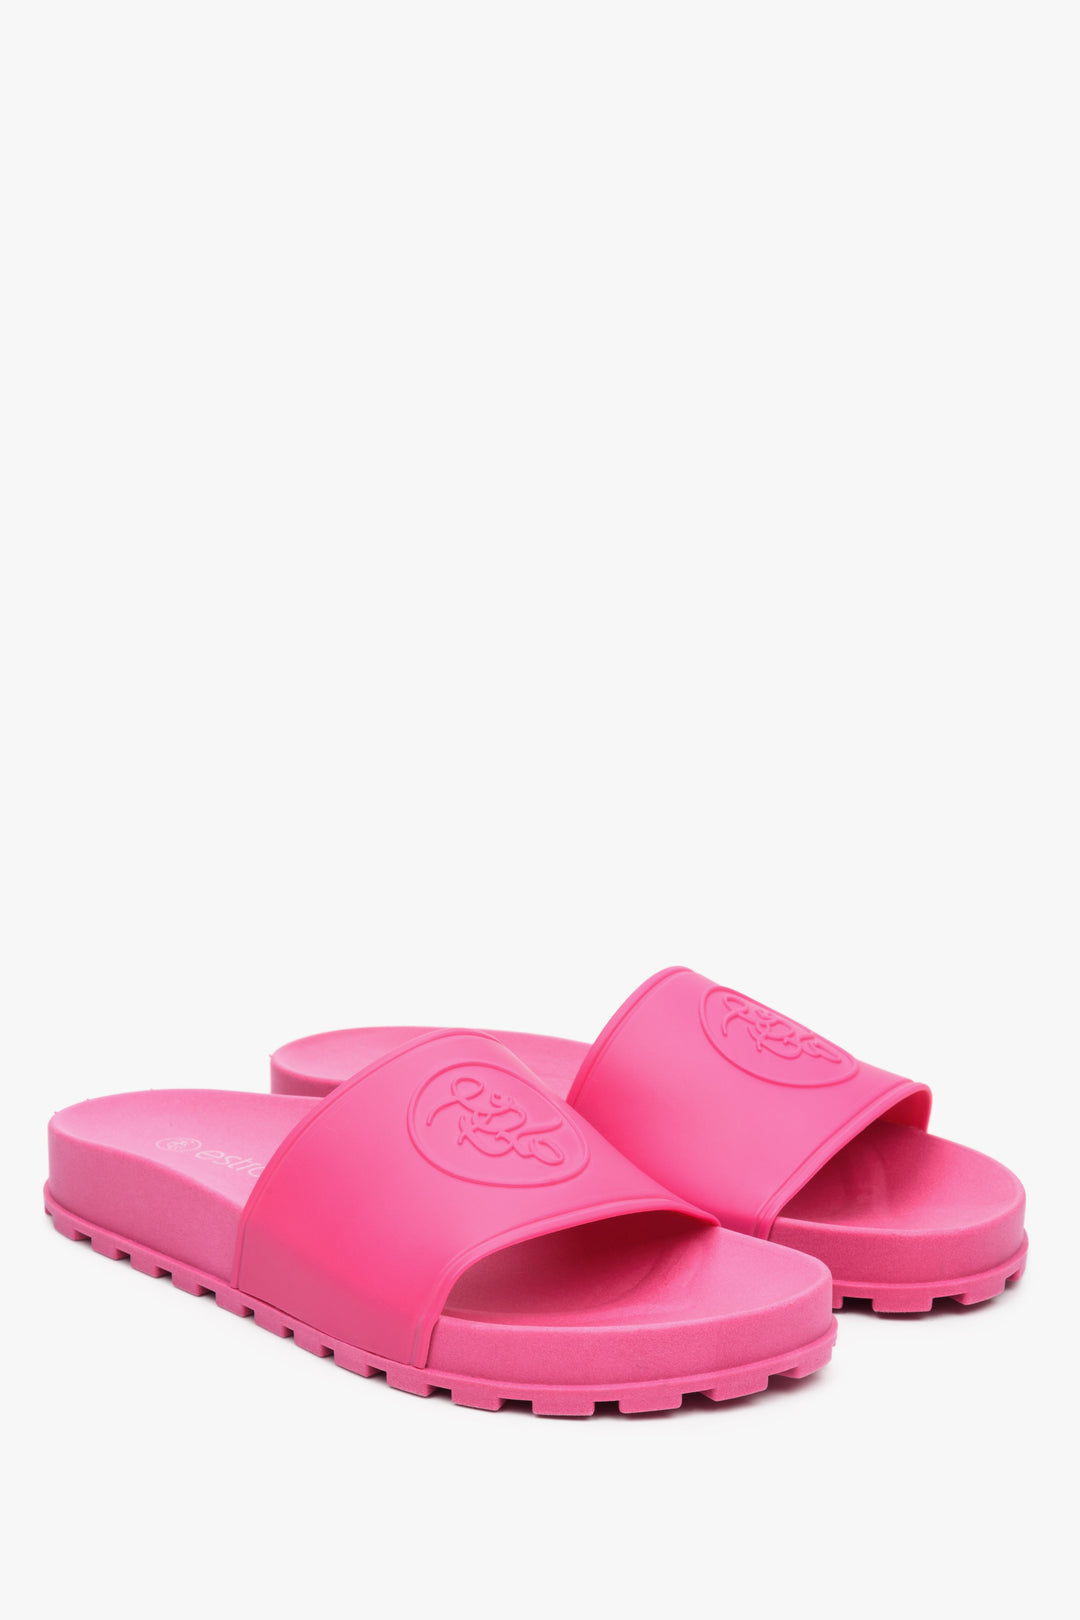 Women's pink Estro rubber flip-flops for fall/spring.